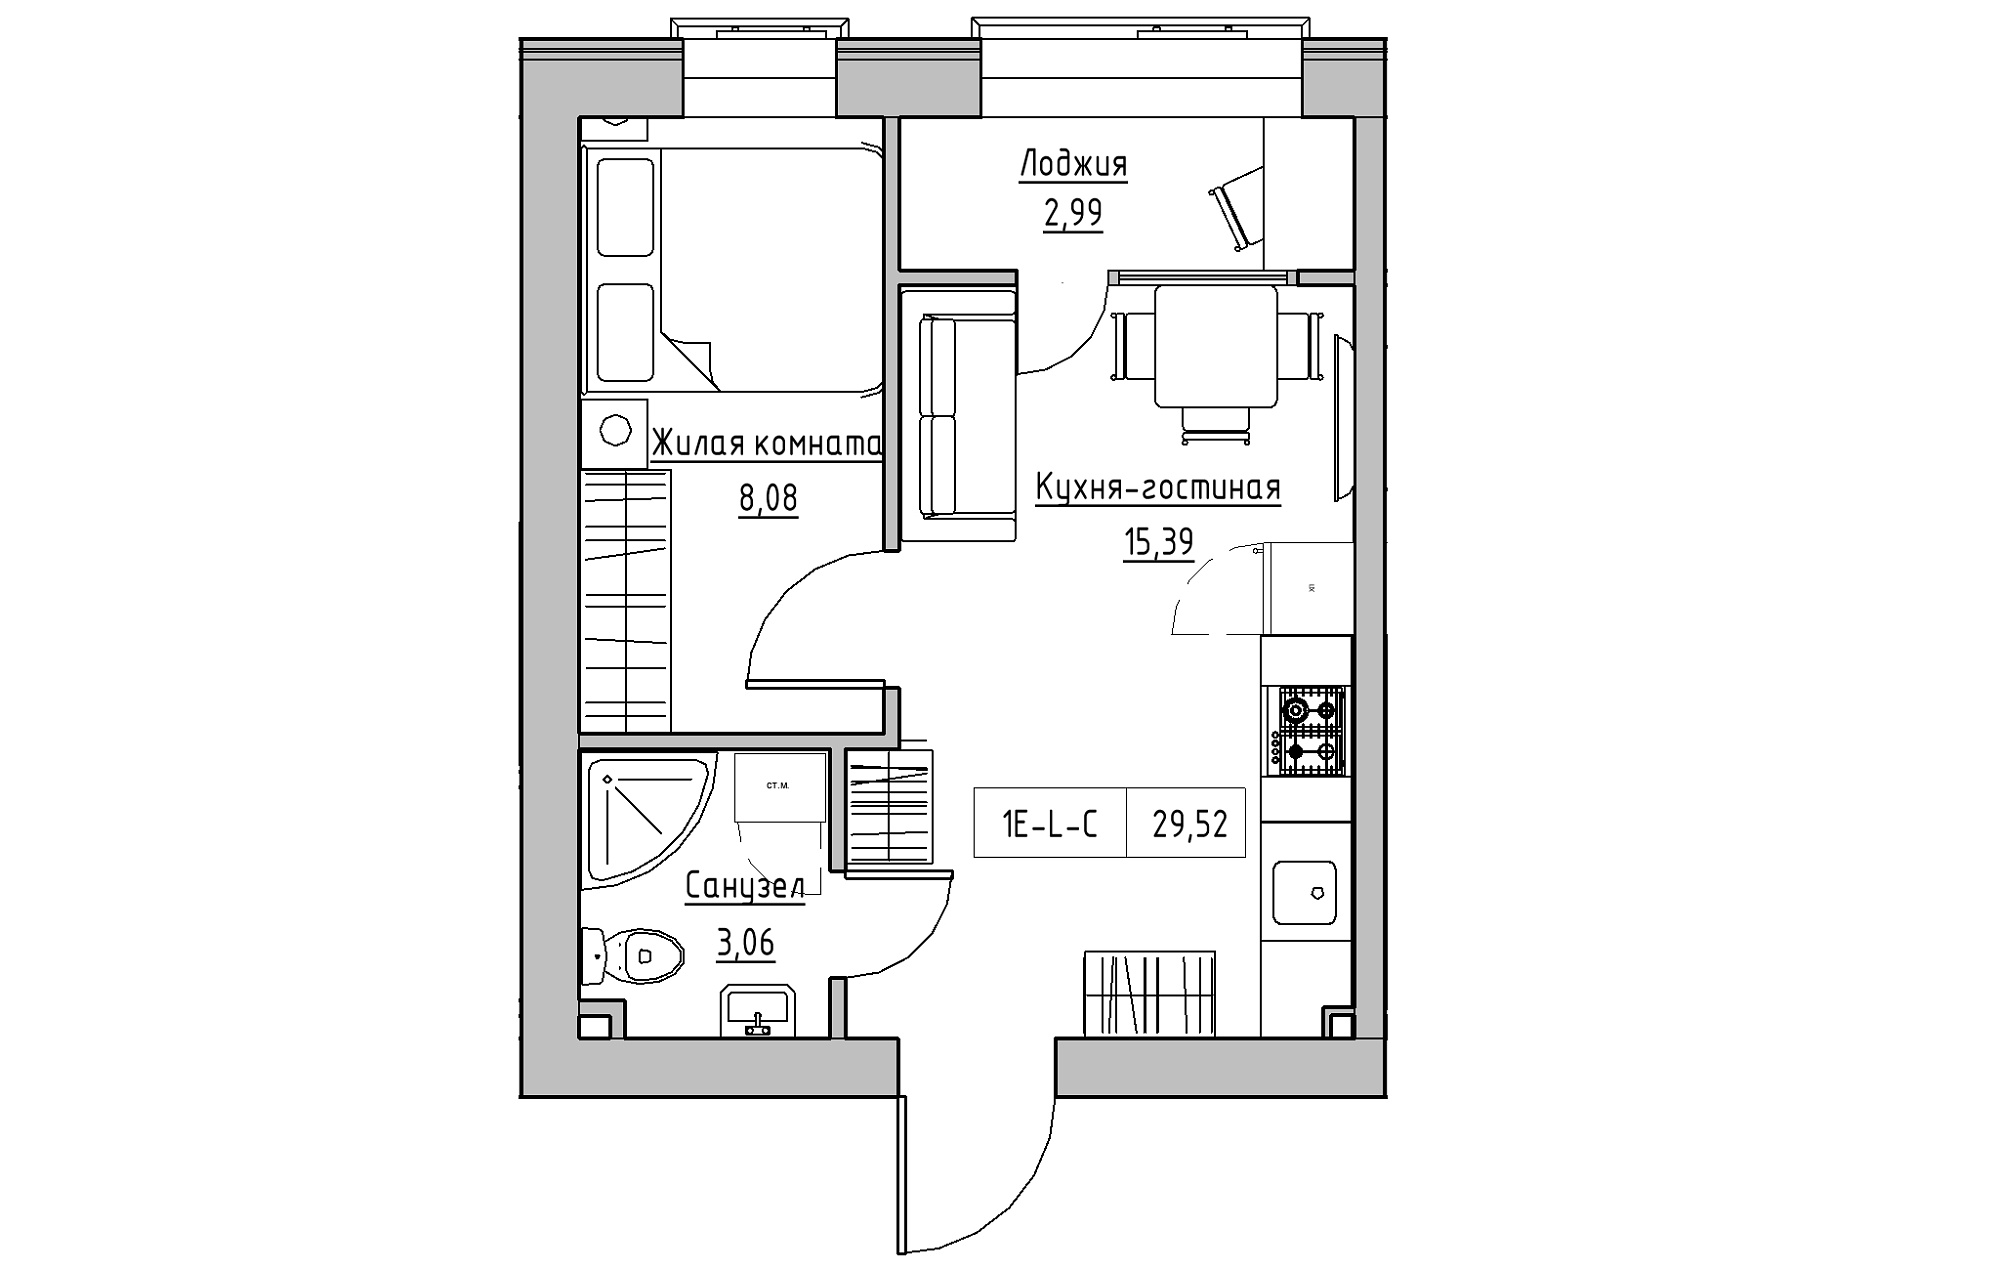 Planning 1-rm flats area 29.52m2, KS-018-01/0006.